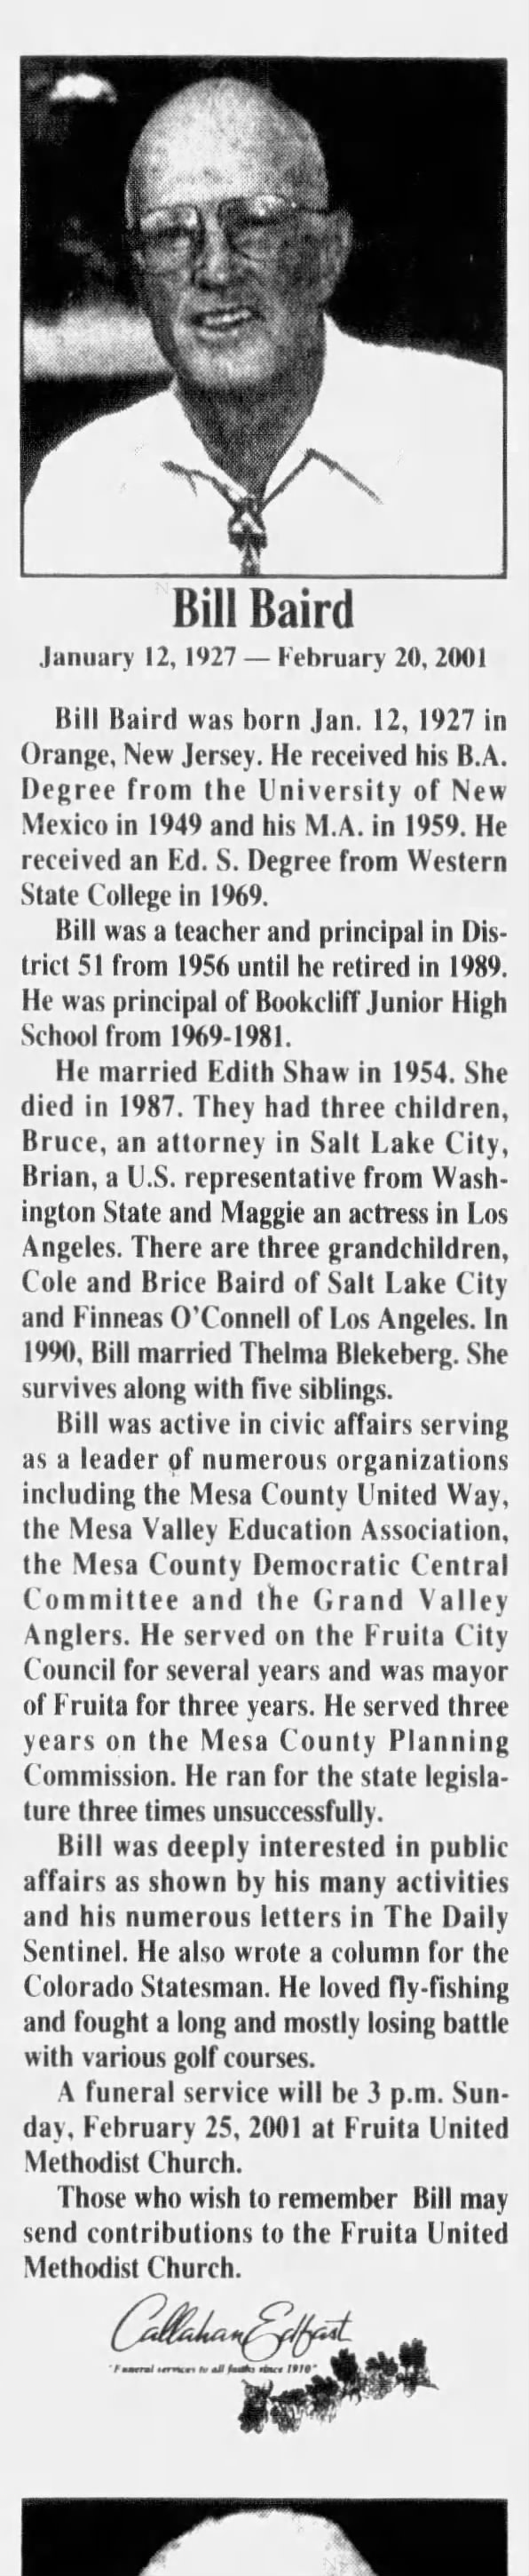 Obituary for Bill Baird, 1927-2001